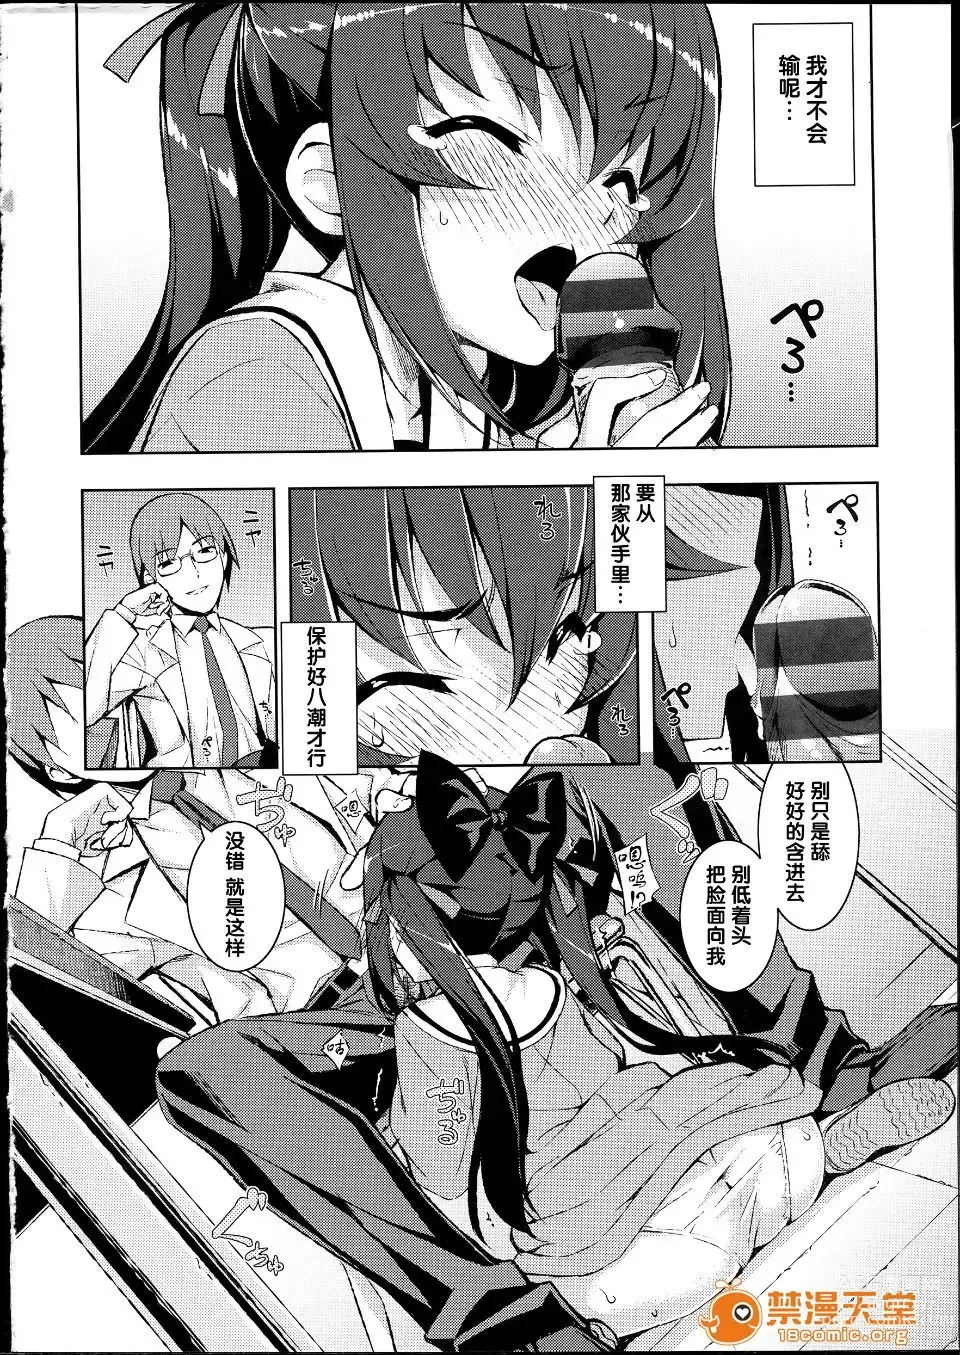 Page 8 of manga NTR²